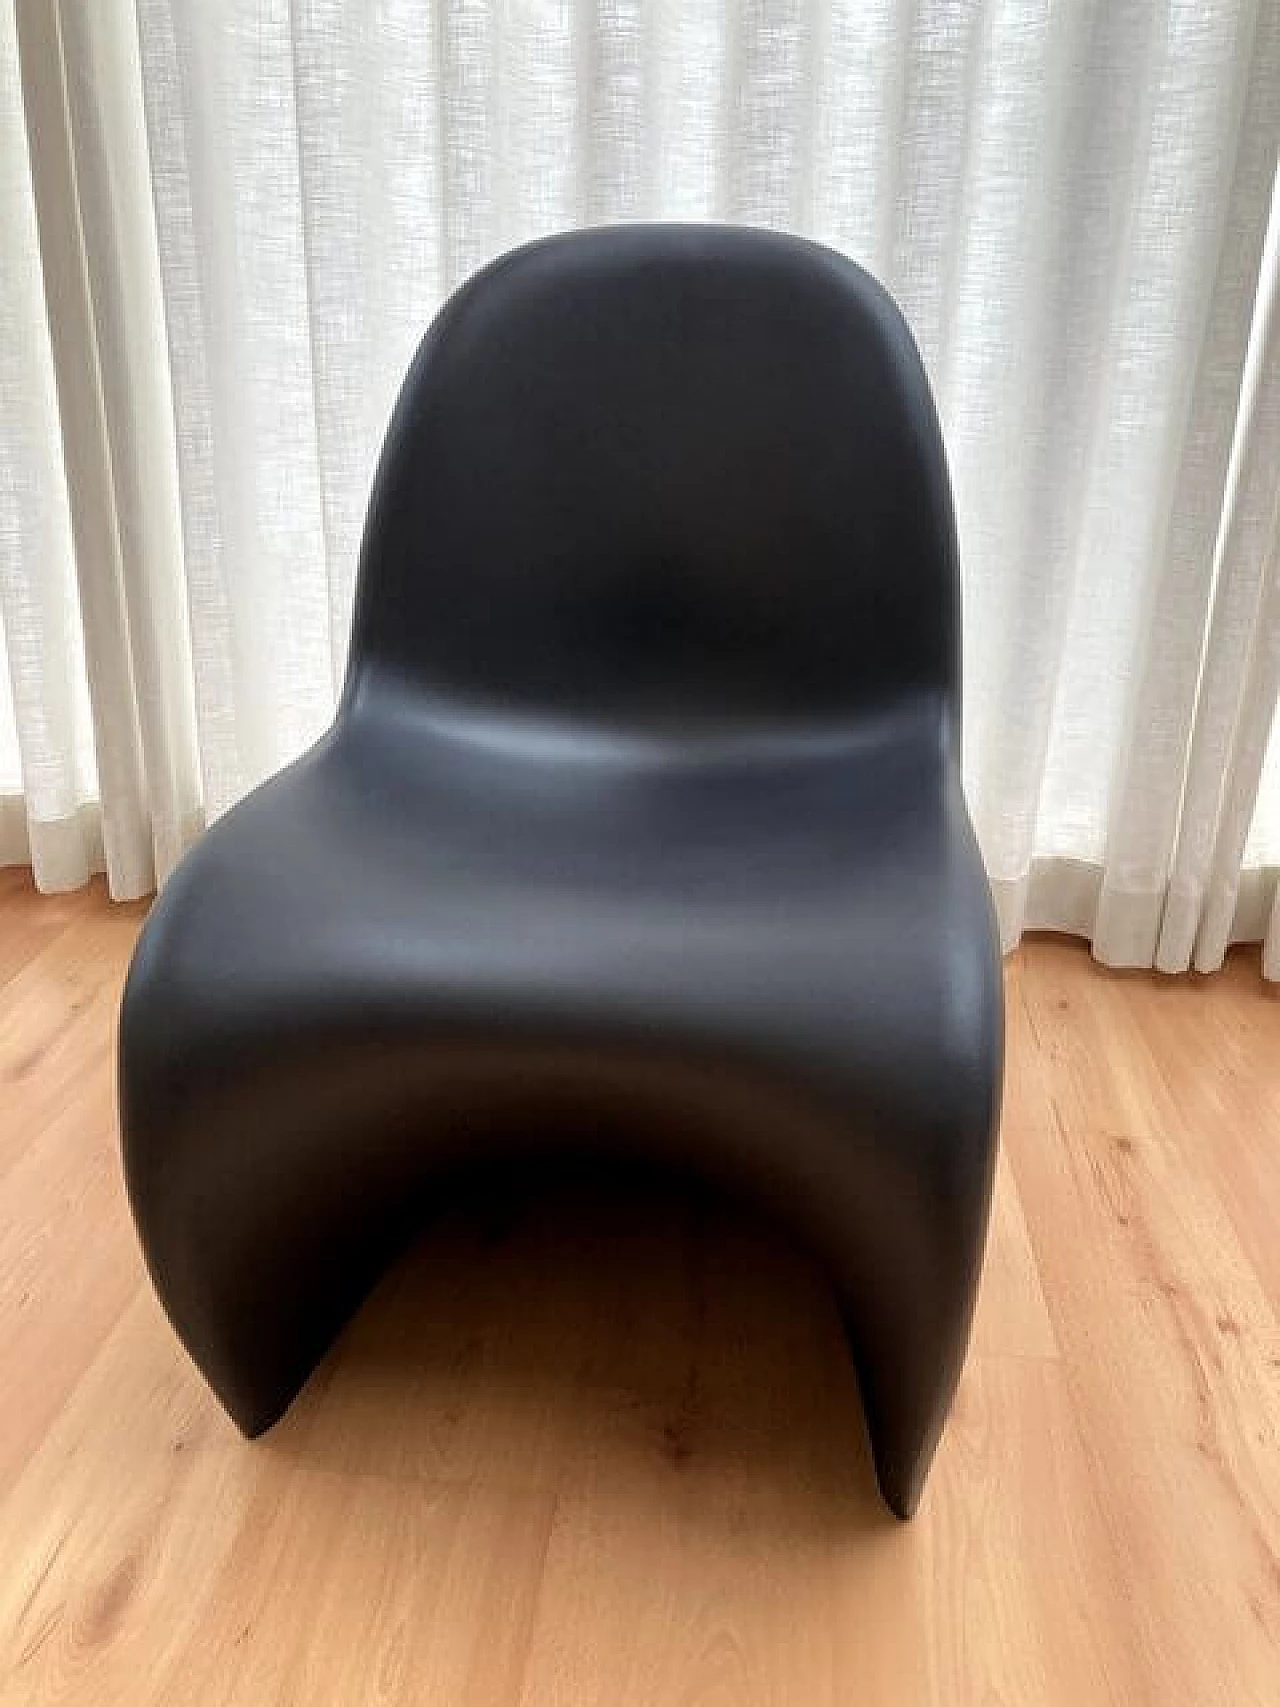 4 Black Panton S chairs by Verner Panton for Vitra 2